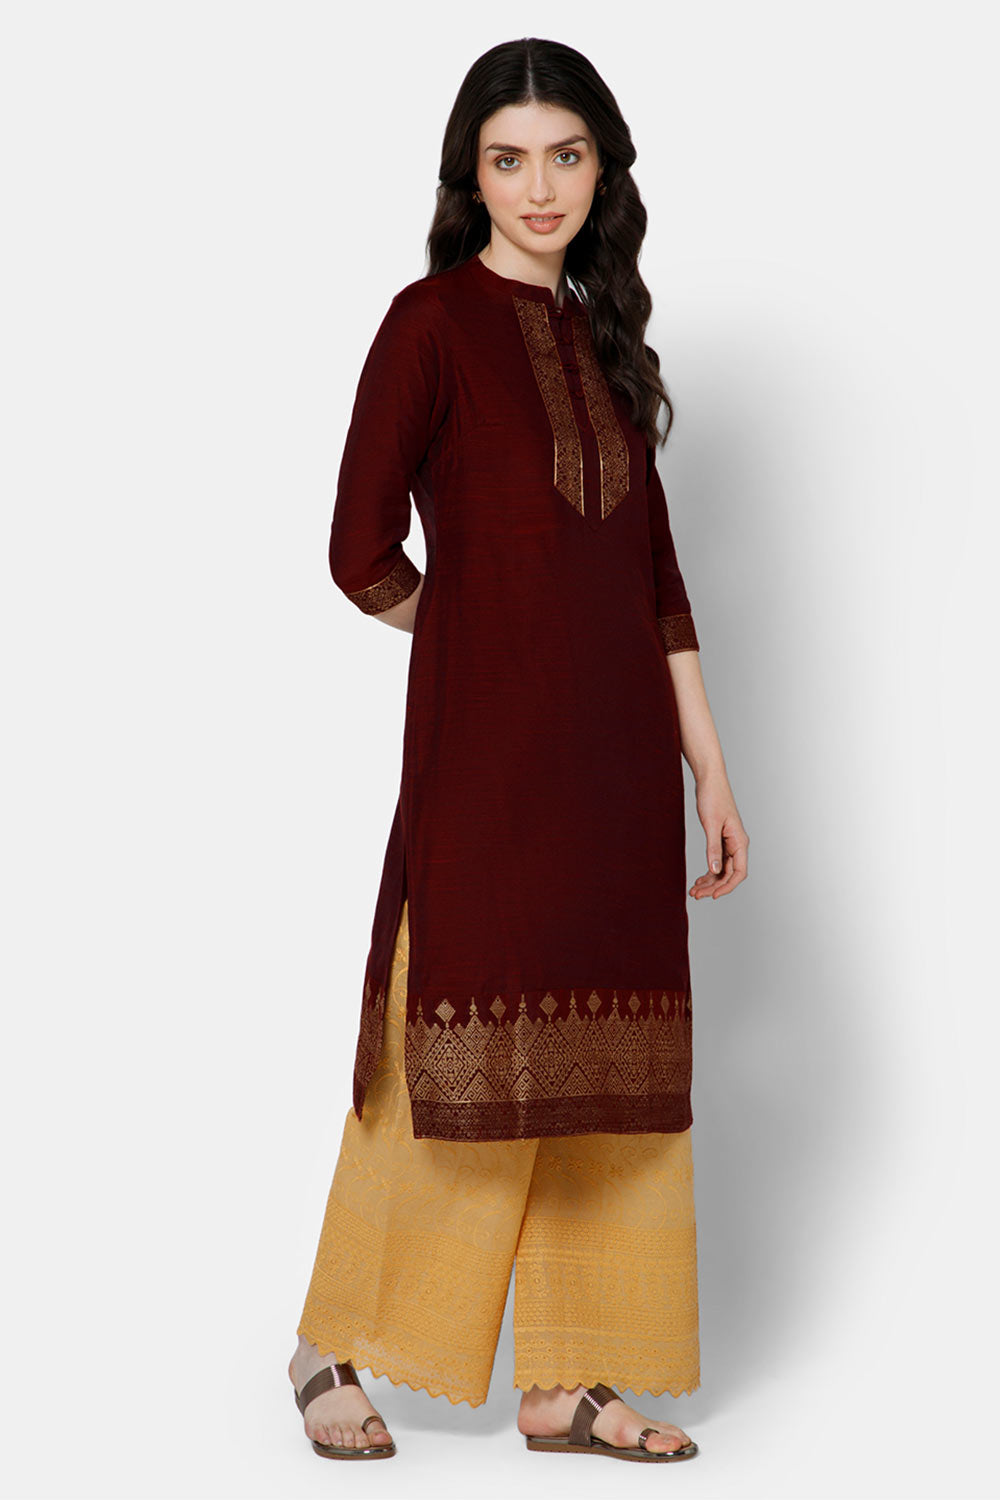 Mythri Women's Ethnic Wear Straight kurta - Red - KU53